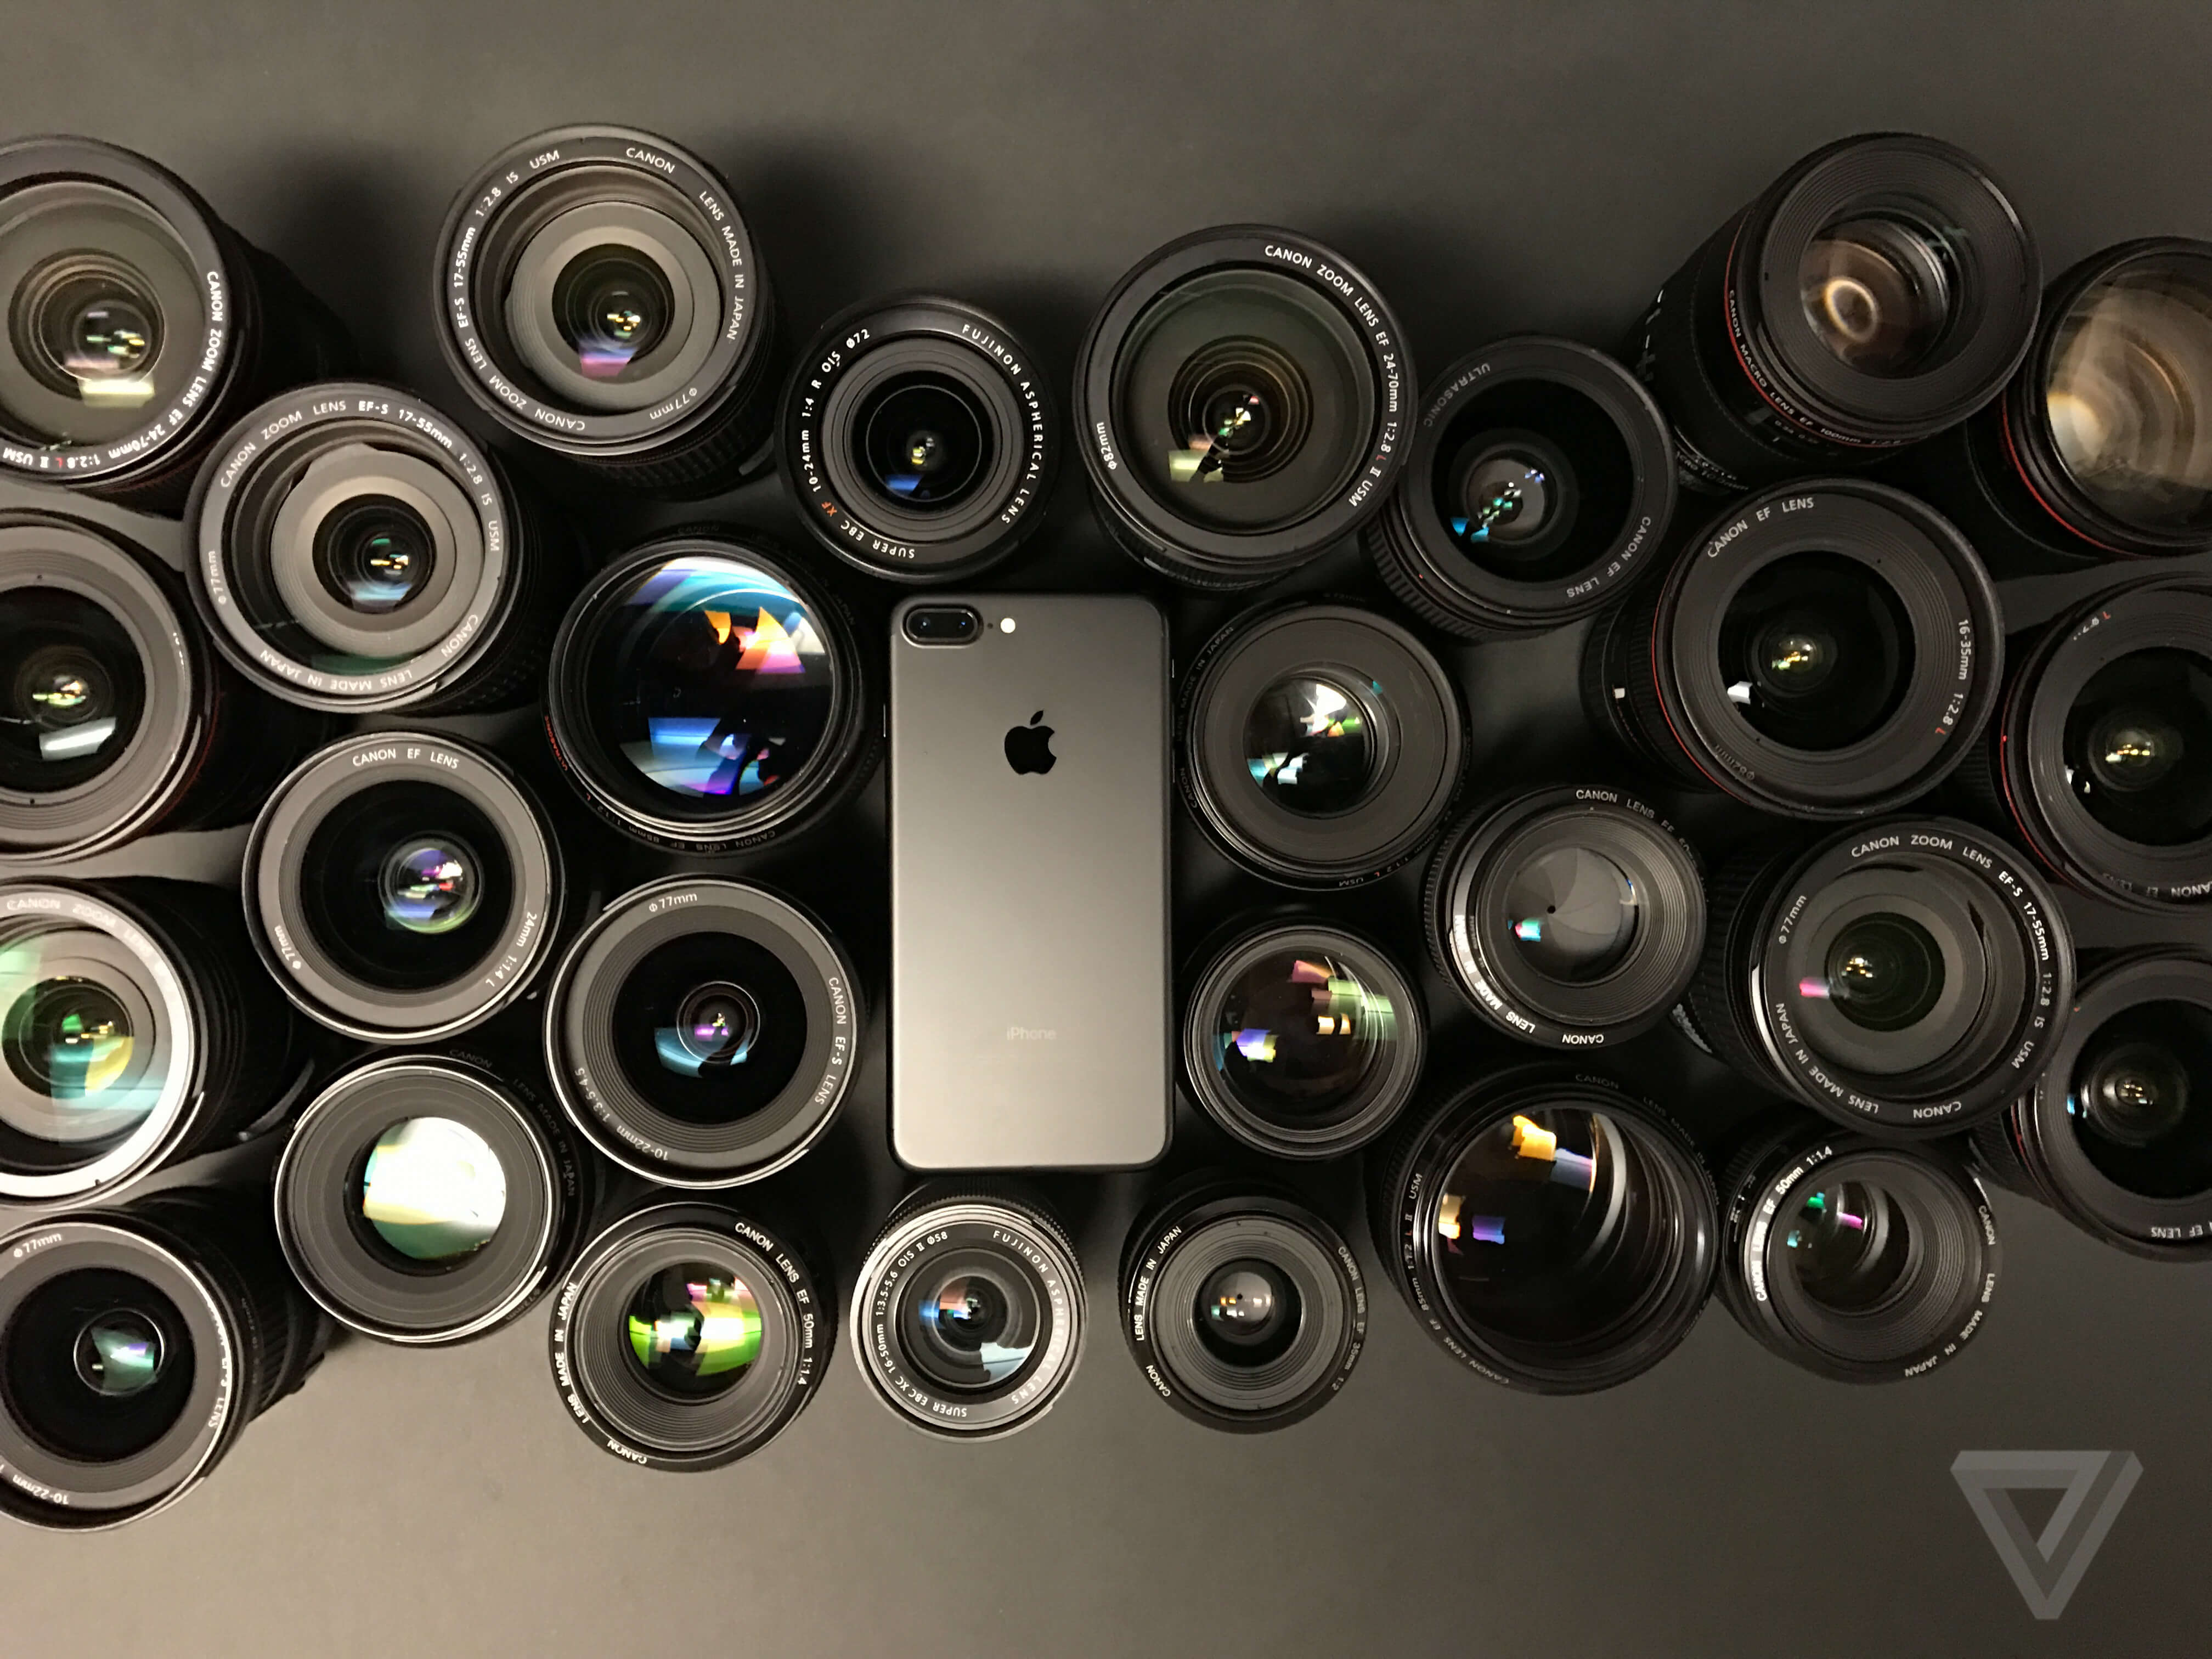 Сравнение камер оригинального iPhone и iPhone 7 Plus